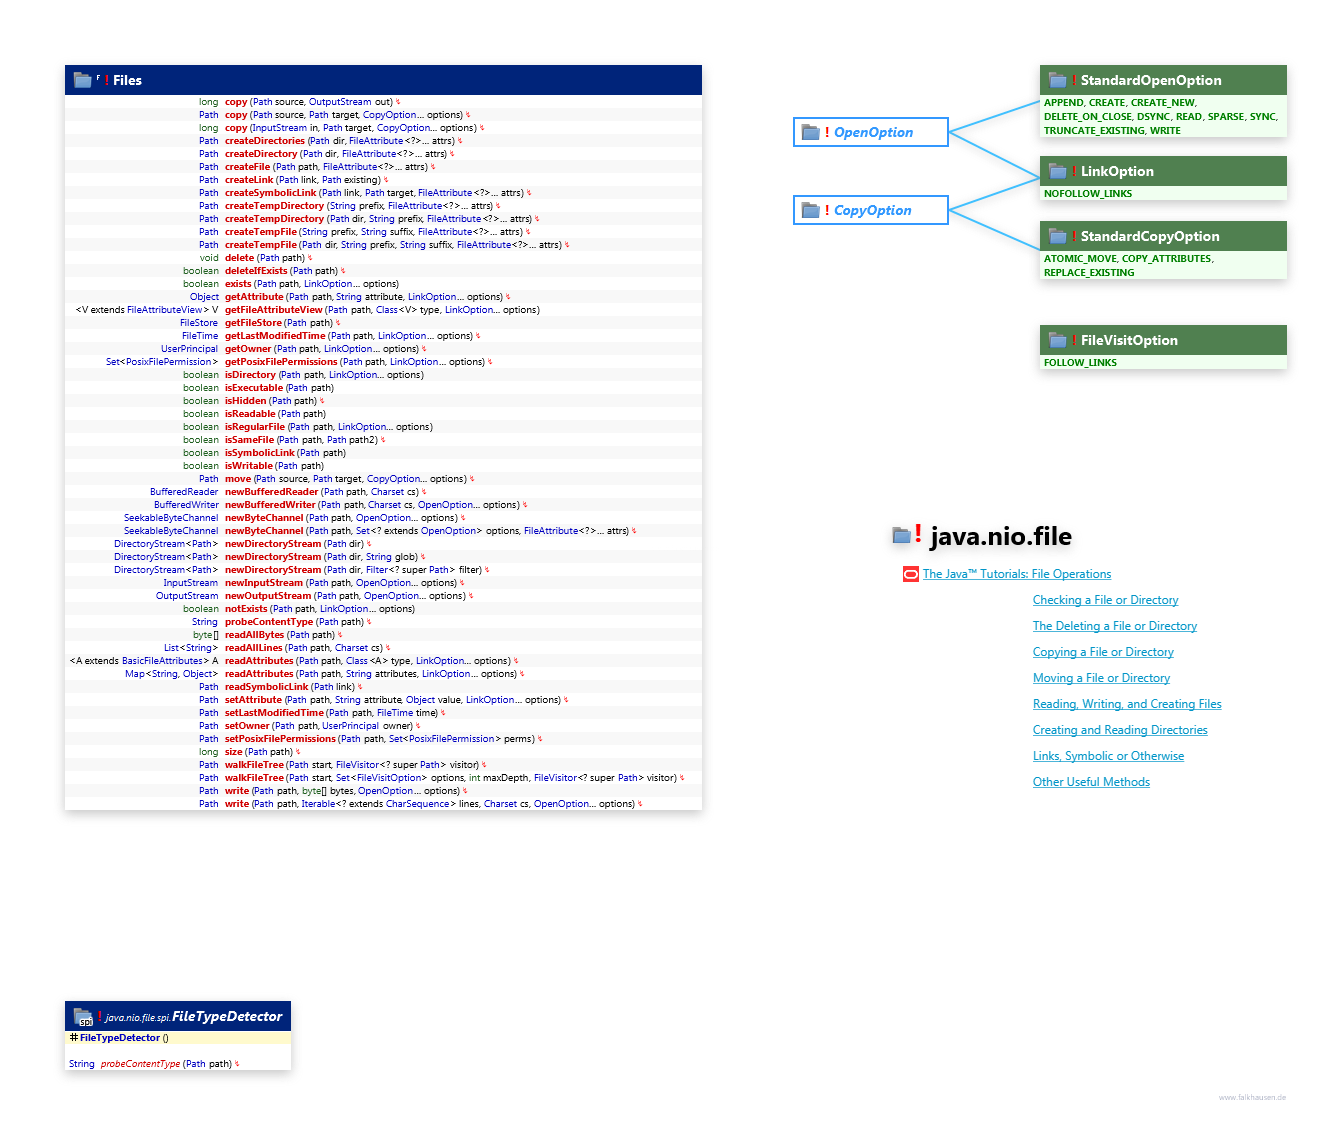 java.nio.file Files class diagram and api documentation for Java 7